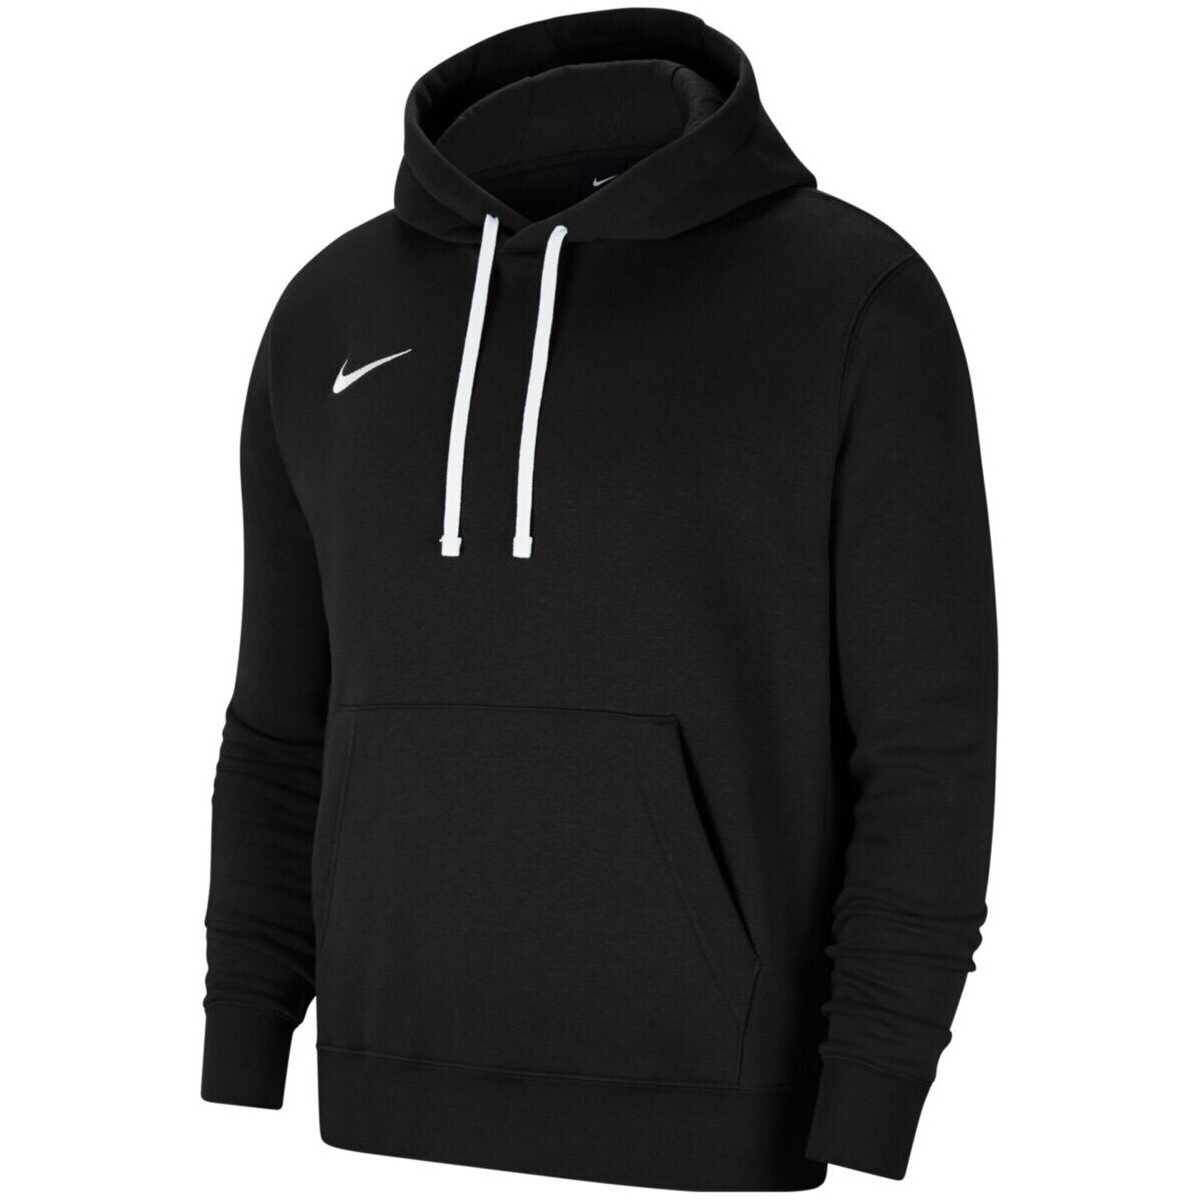 Textiel Jongens Sweaters / Sweatshirts Nike  Zwart